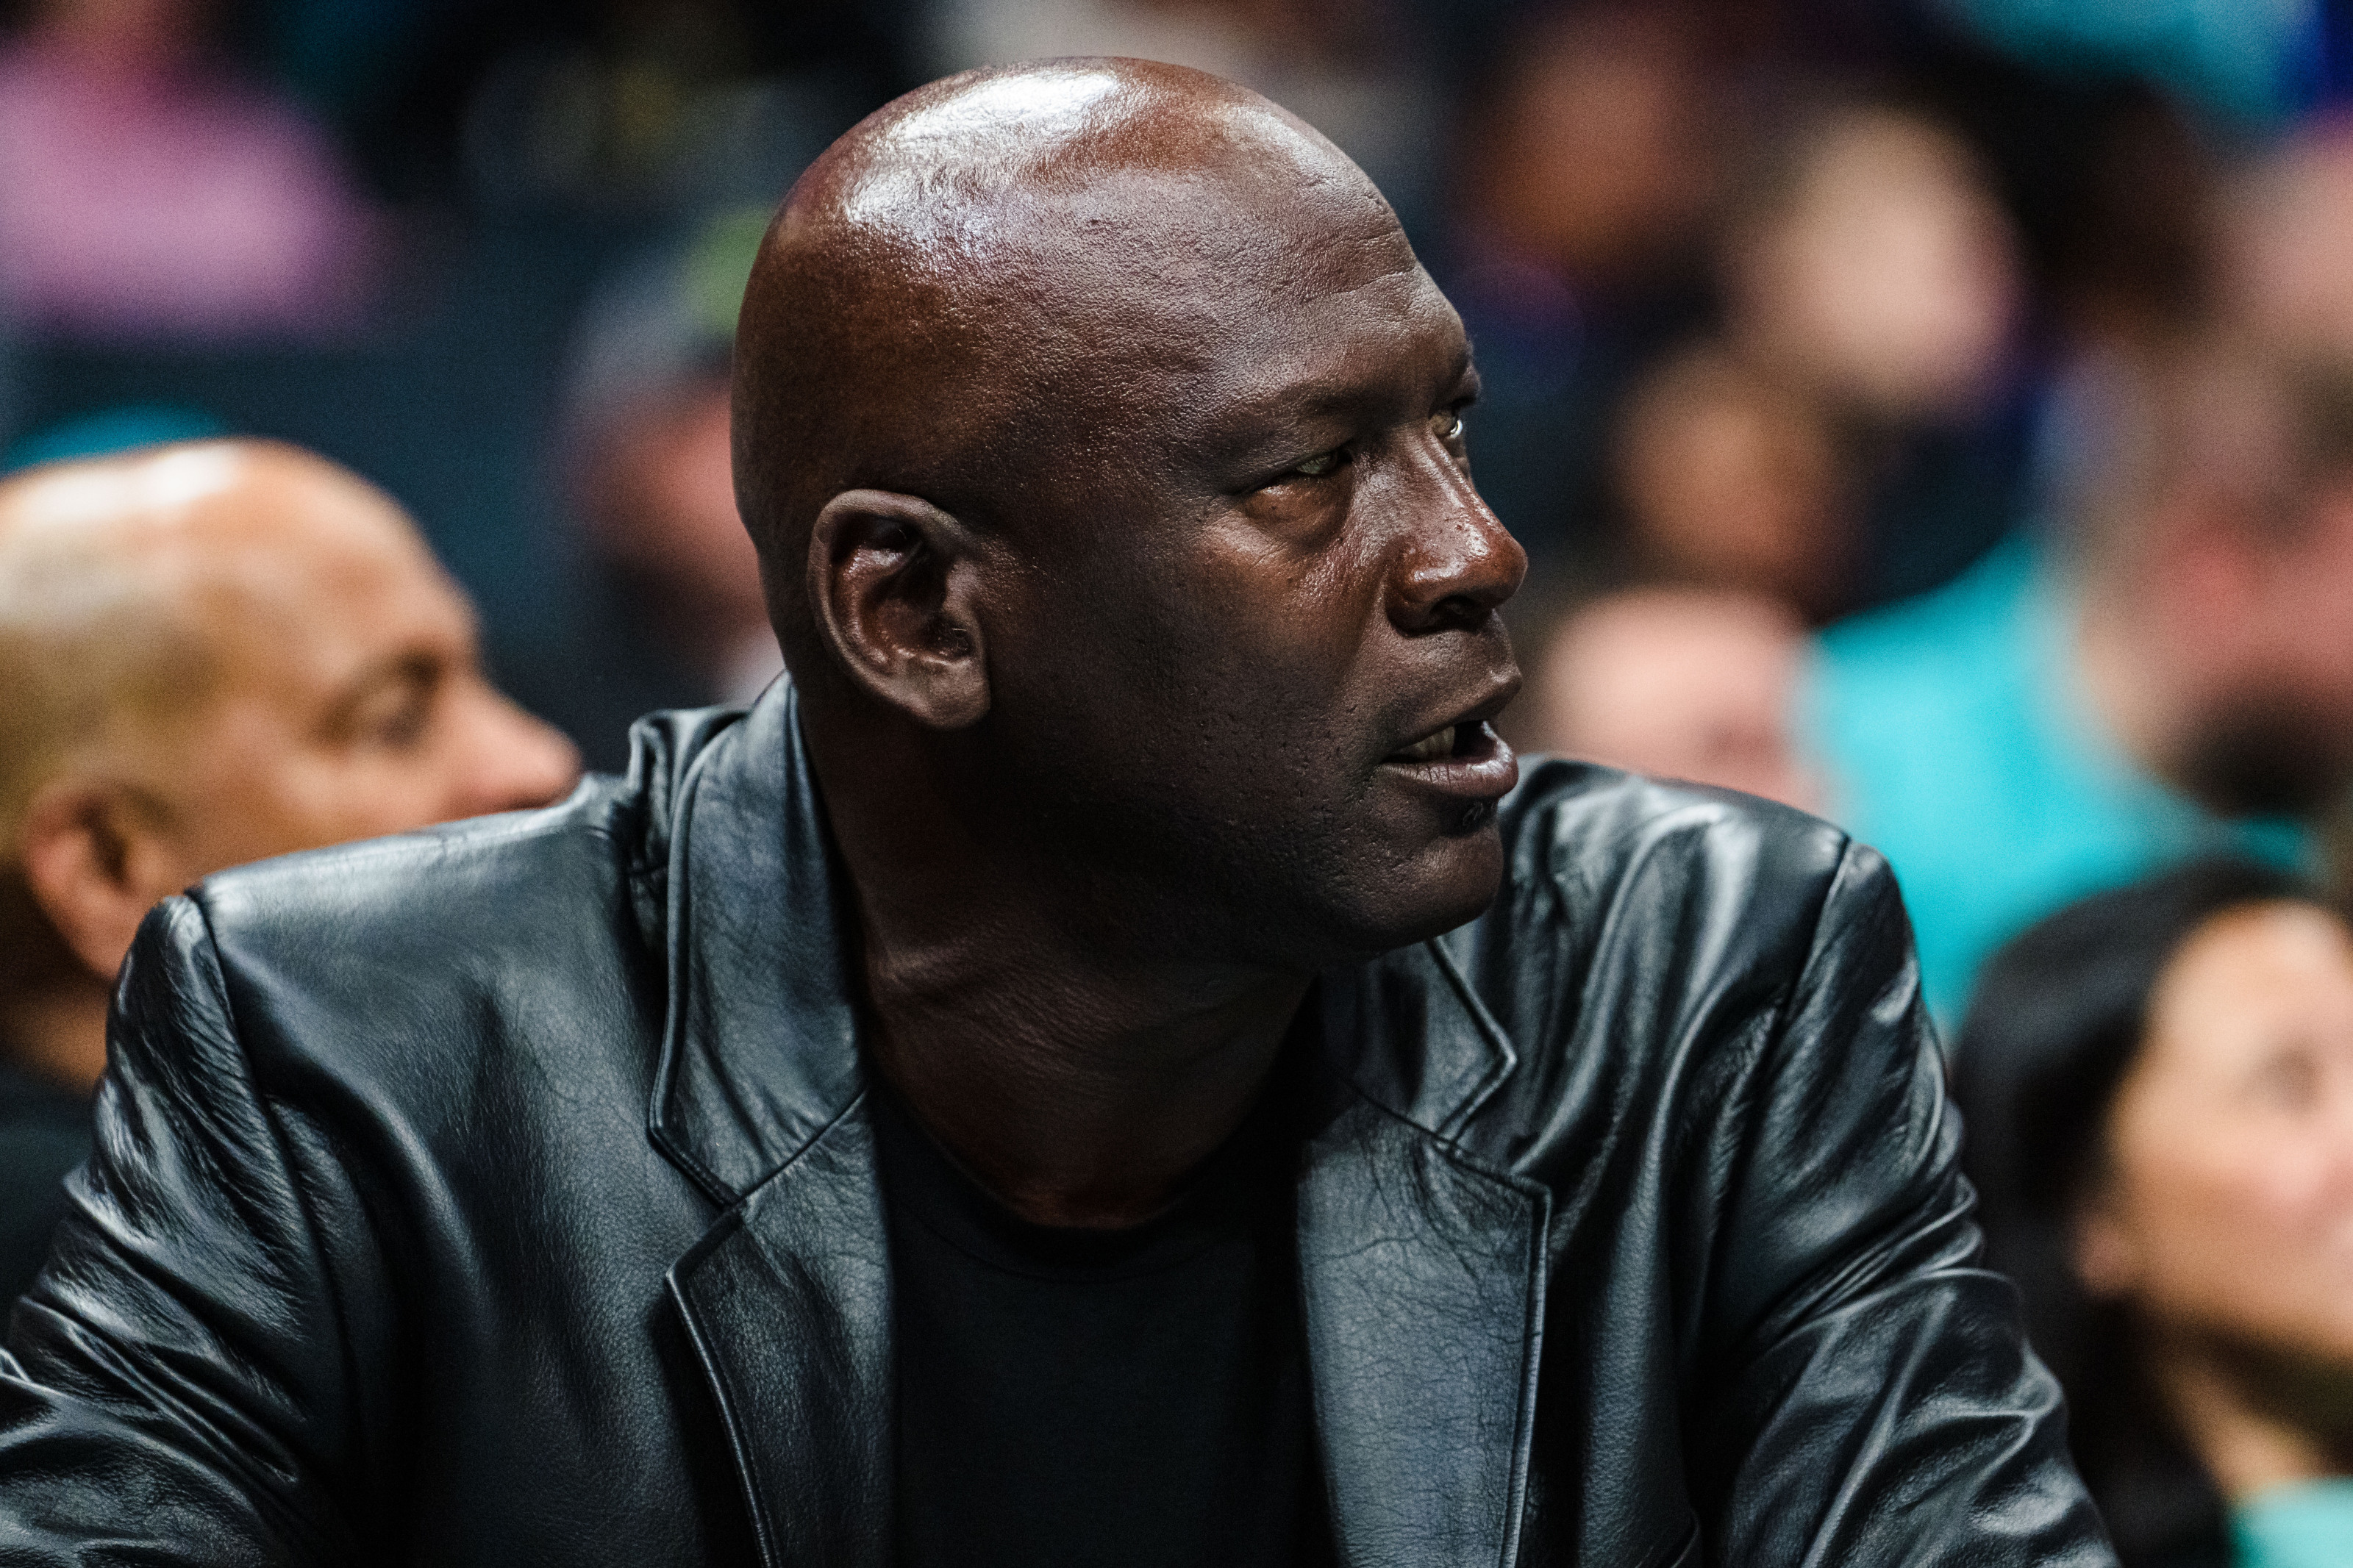 Michael Jordan Agrees to Sell Majority Stake in Charlotte Hornets